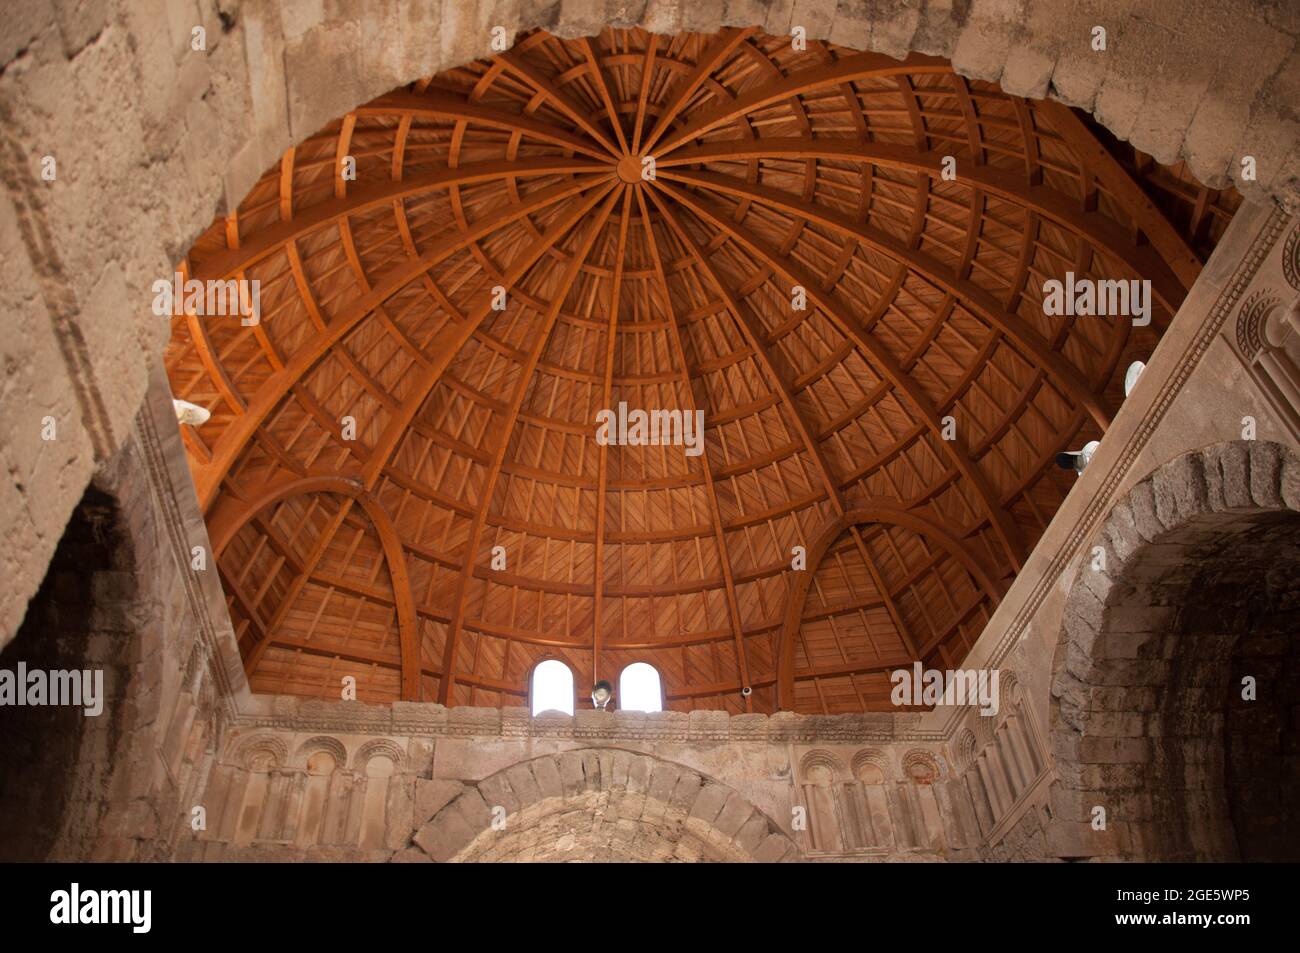 Ceiling of the Gateway to the Umayyad Palace, Citadel, Amman, Jordan, Middle East Stock Photo